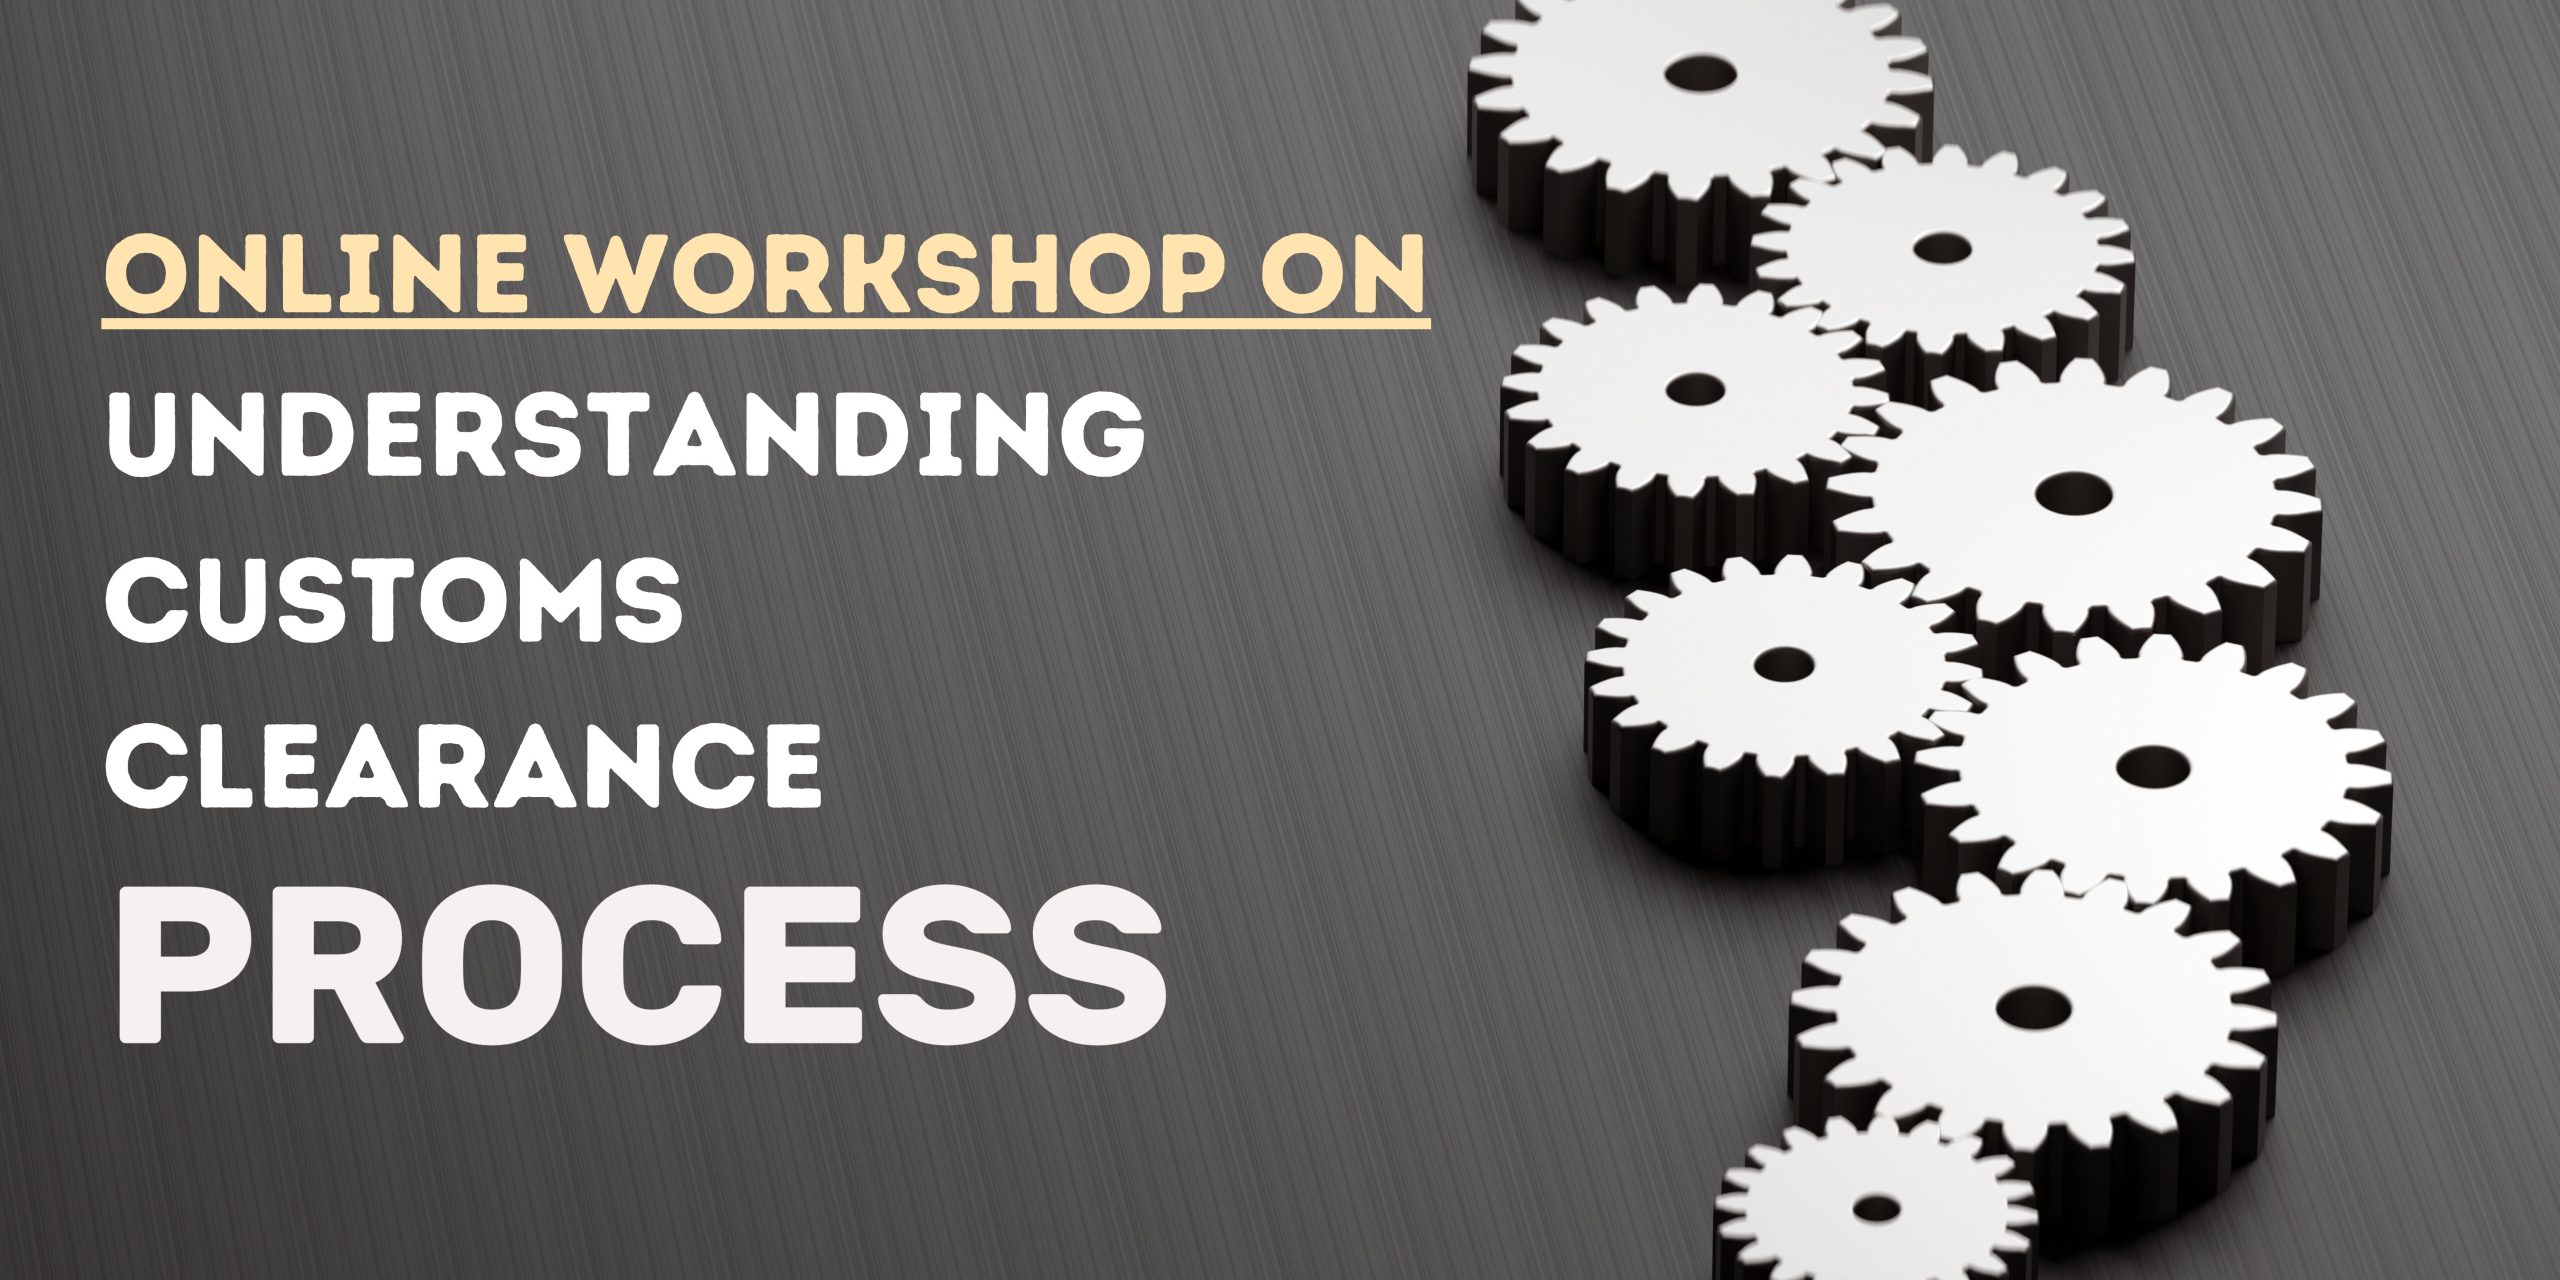 Workshop on Understanding Customs Clearance processes